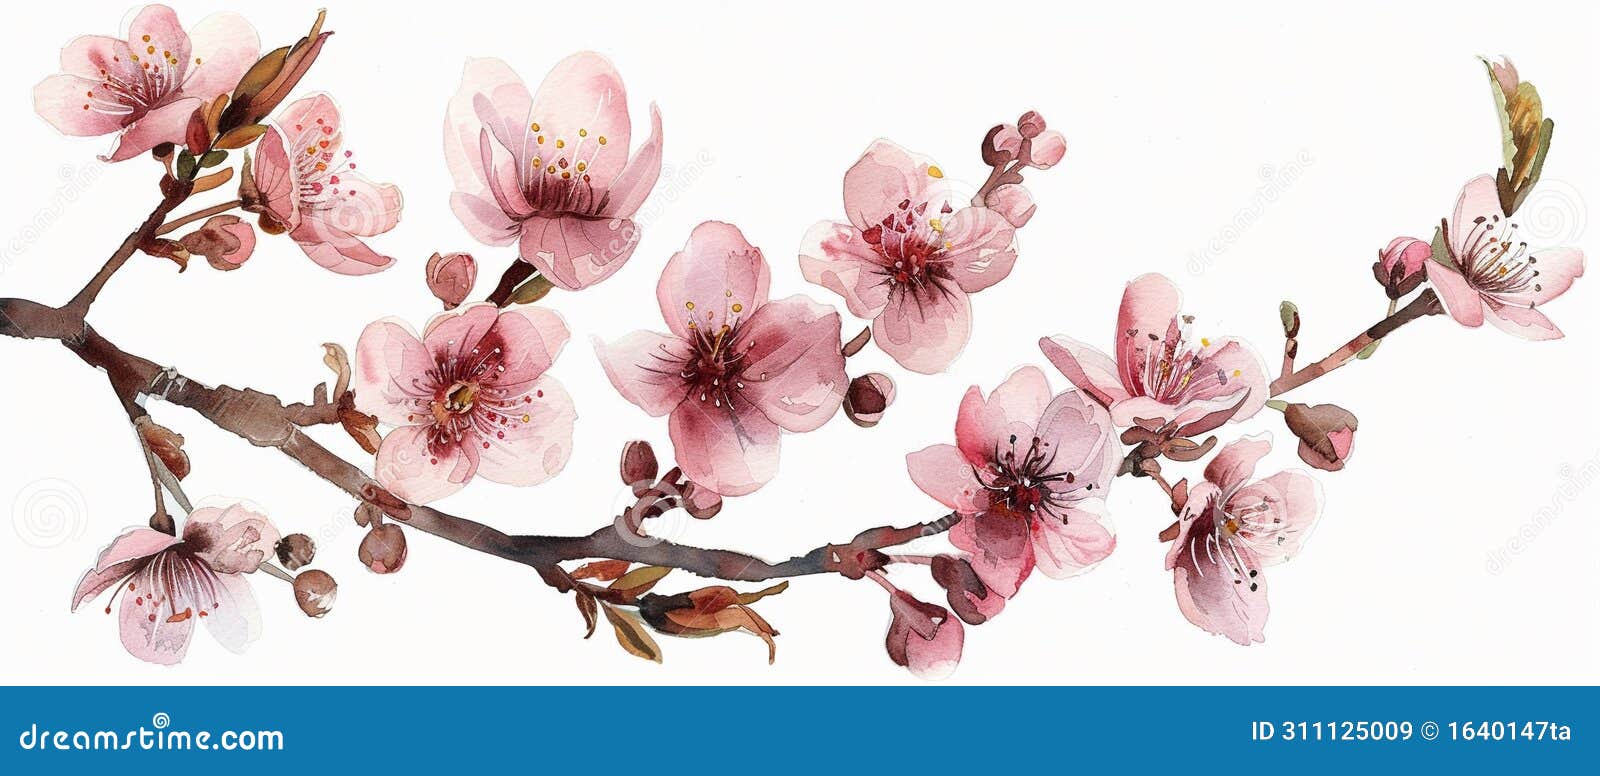 cherry blossom branch botanica style